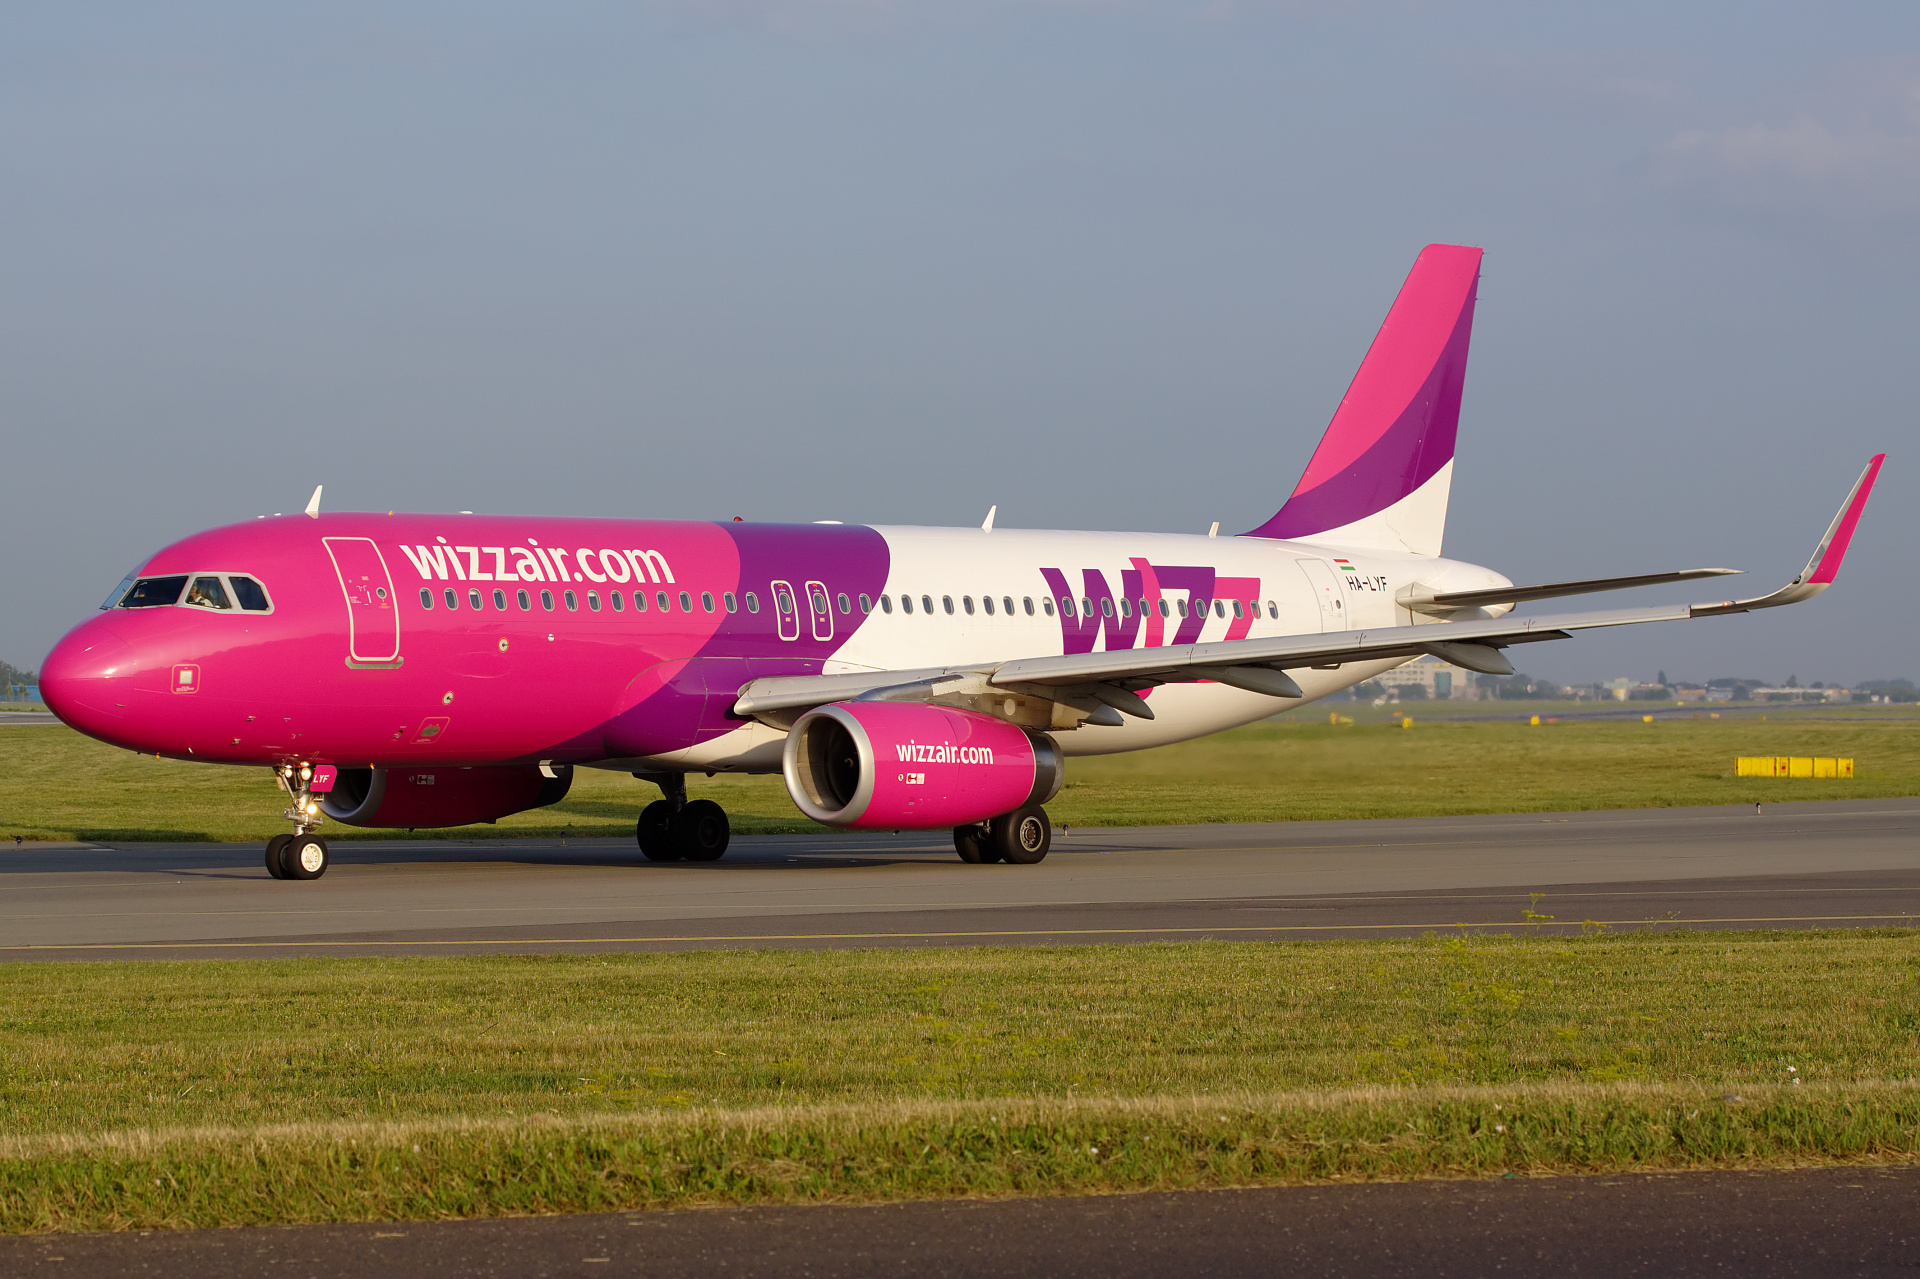 HA-LYF (Samoloty » Spotting na EPWA » Airbus A320-200 » Wizz Air)